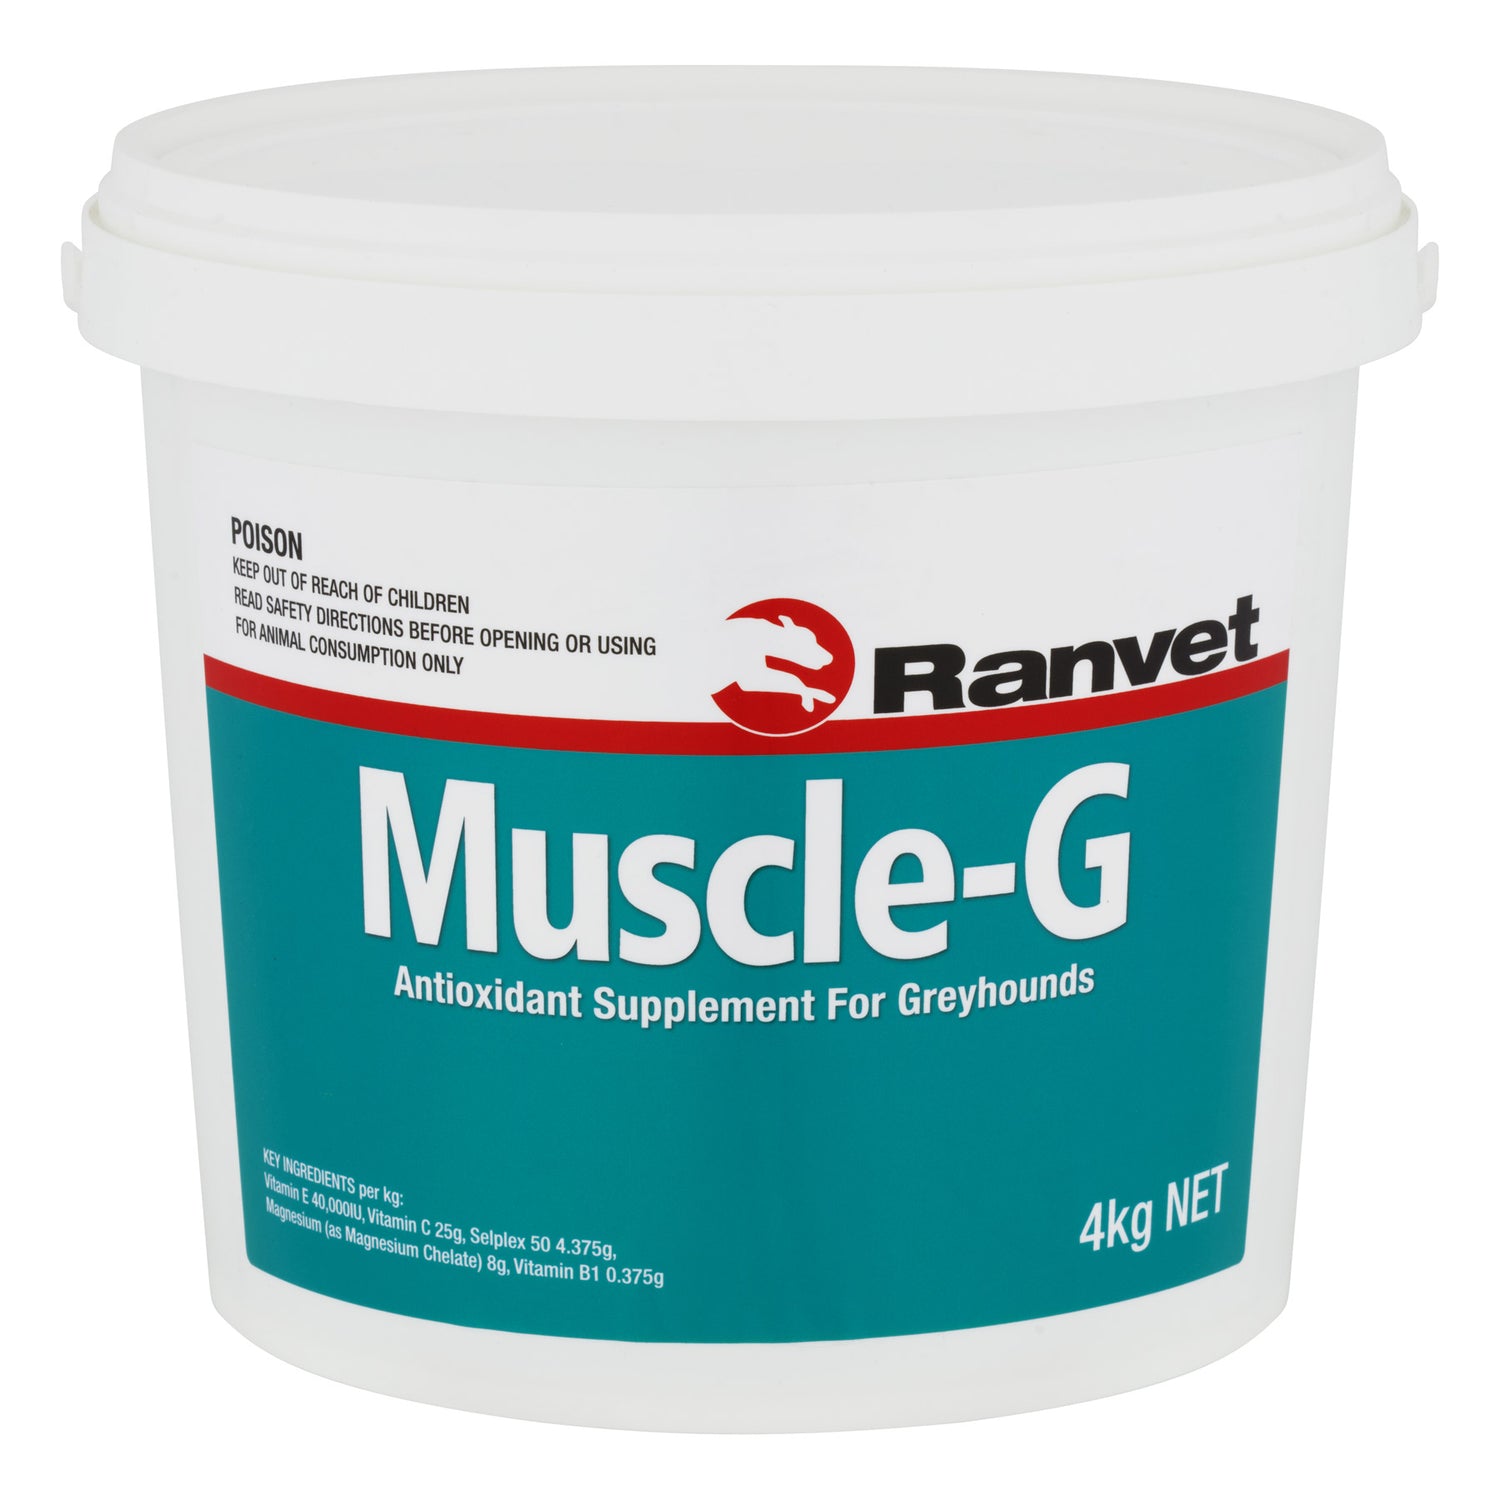 Muscle-G 4kg (Ranvet)